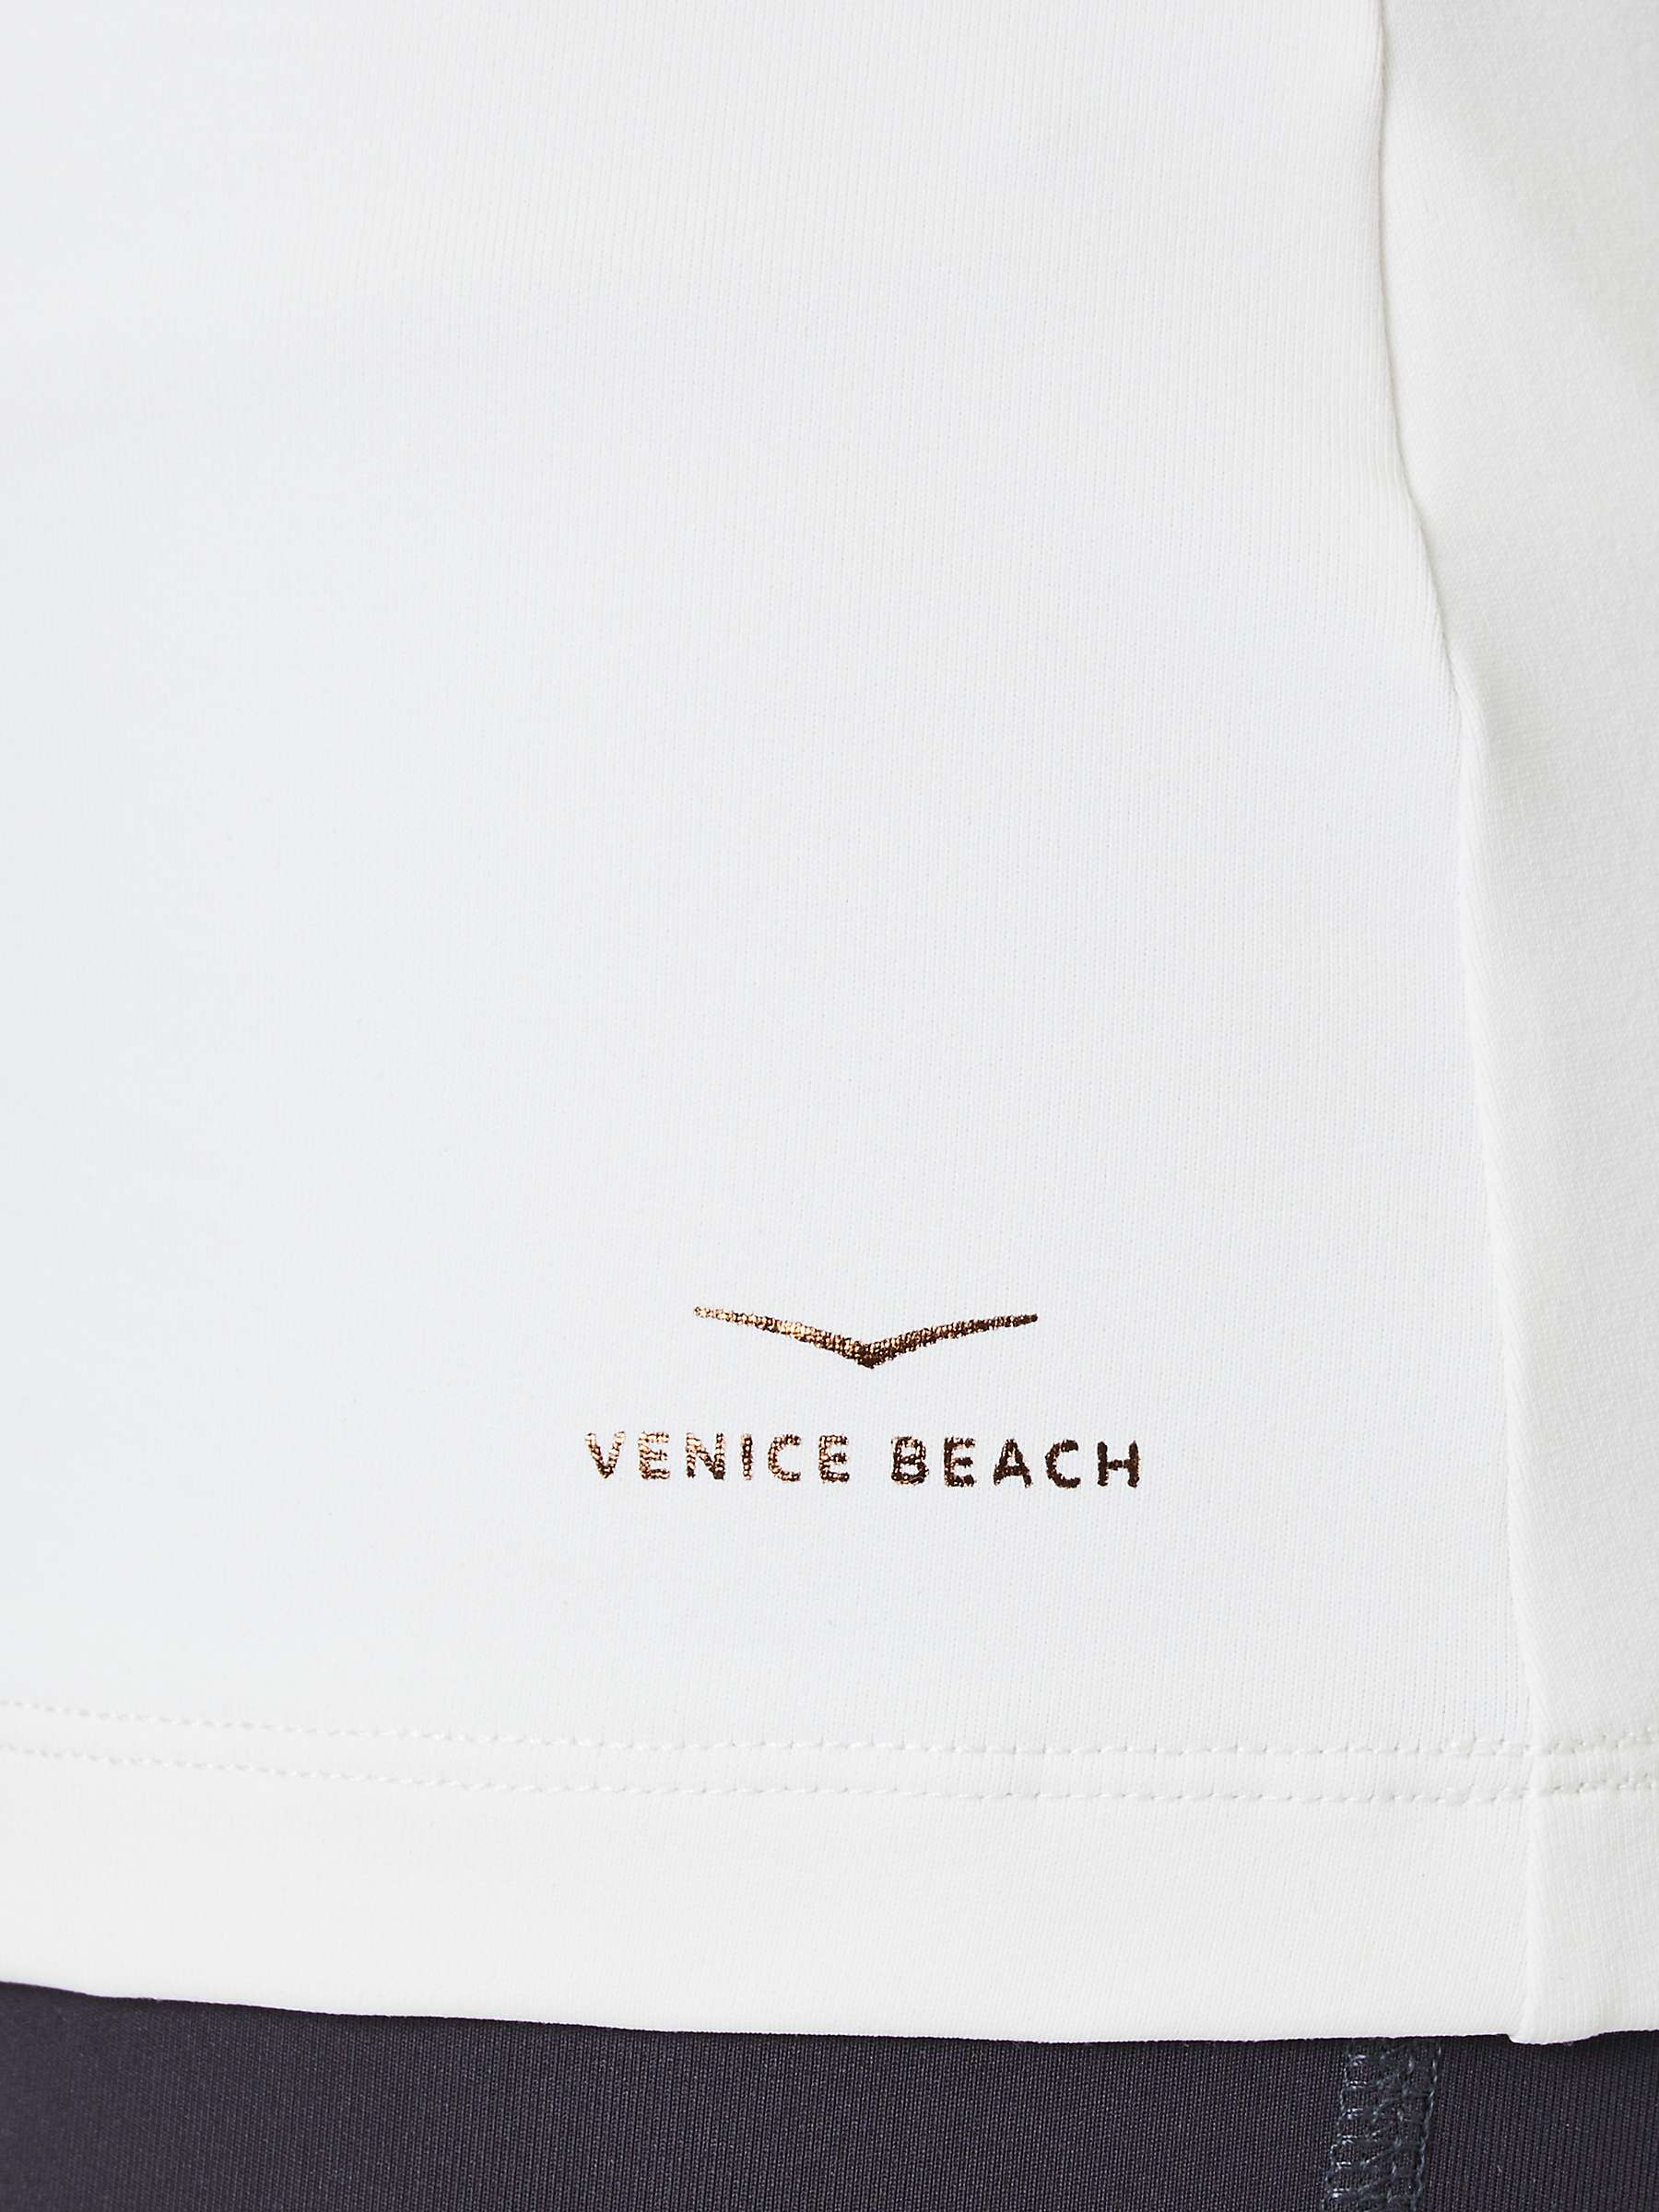 Buy Venice Beach Nimah Gym Top Online at johnlewis.com